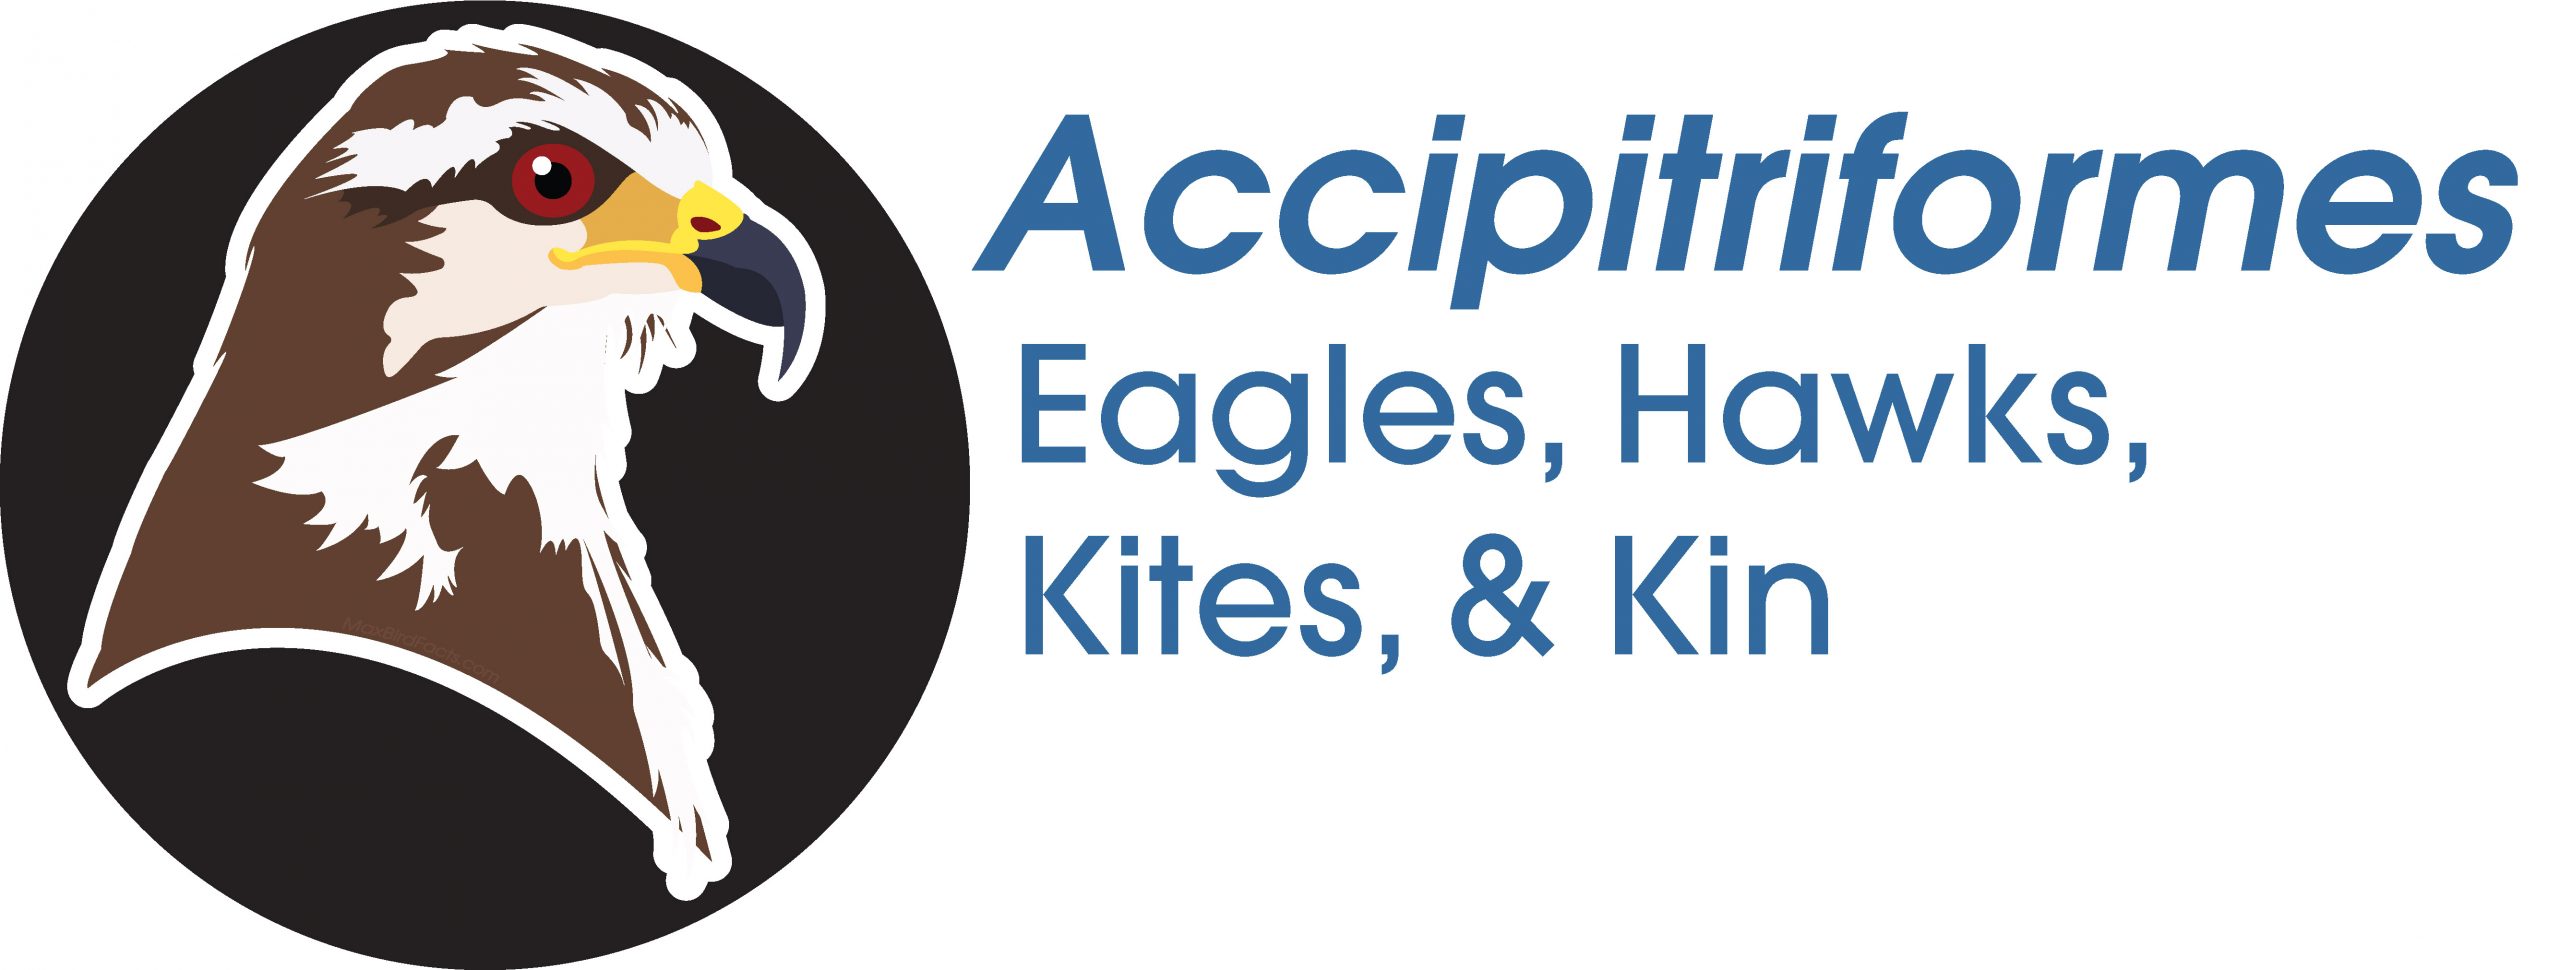 Accipitriformes
Eagles, Hawks, Kites, and Kin
Snail Kite